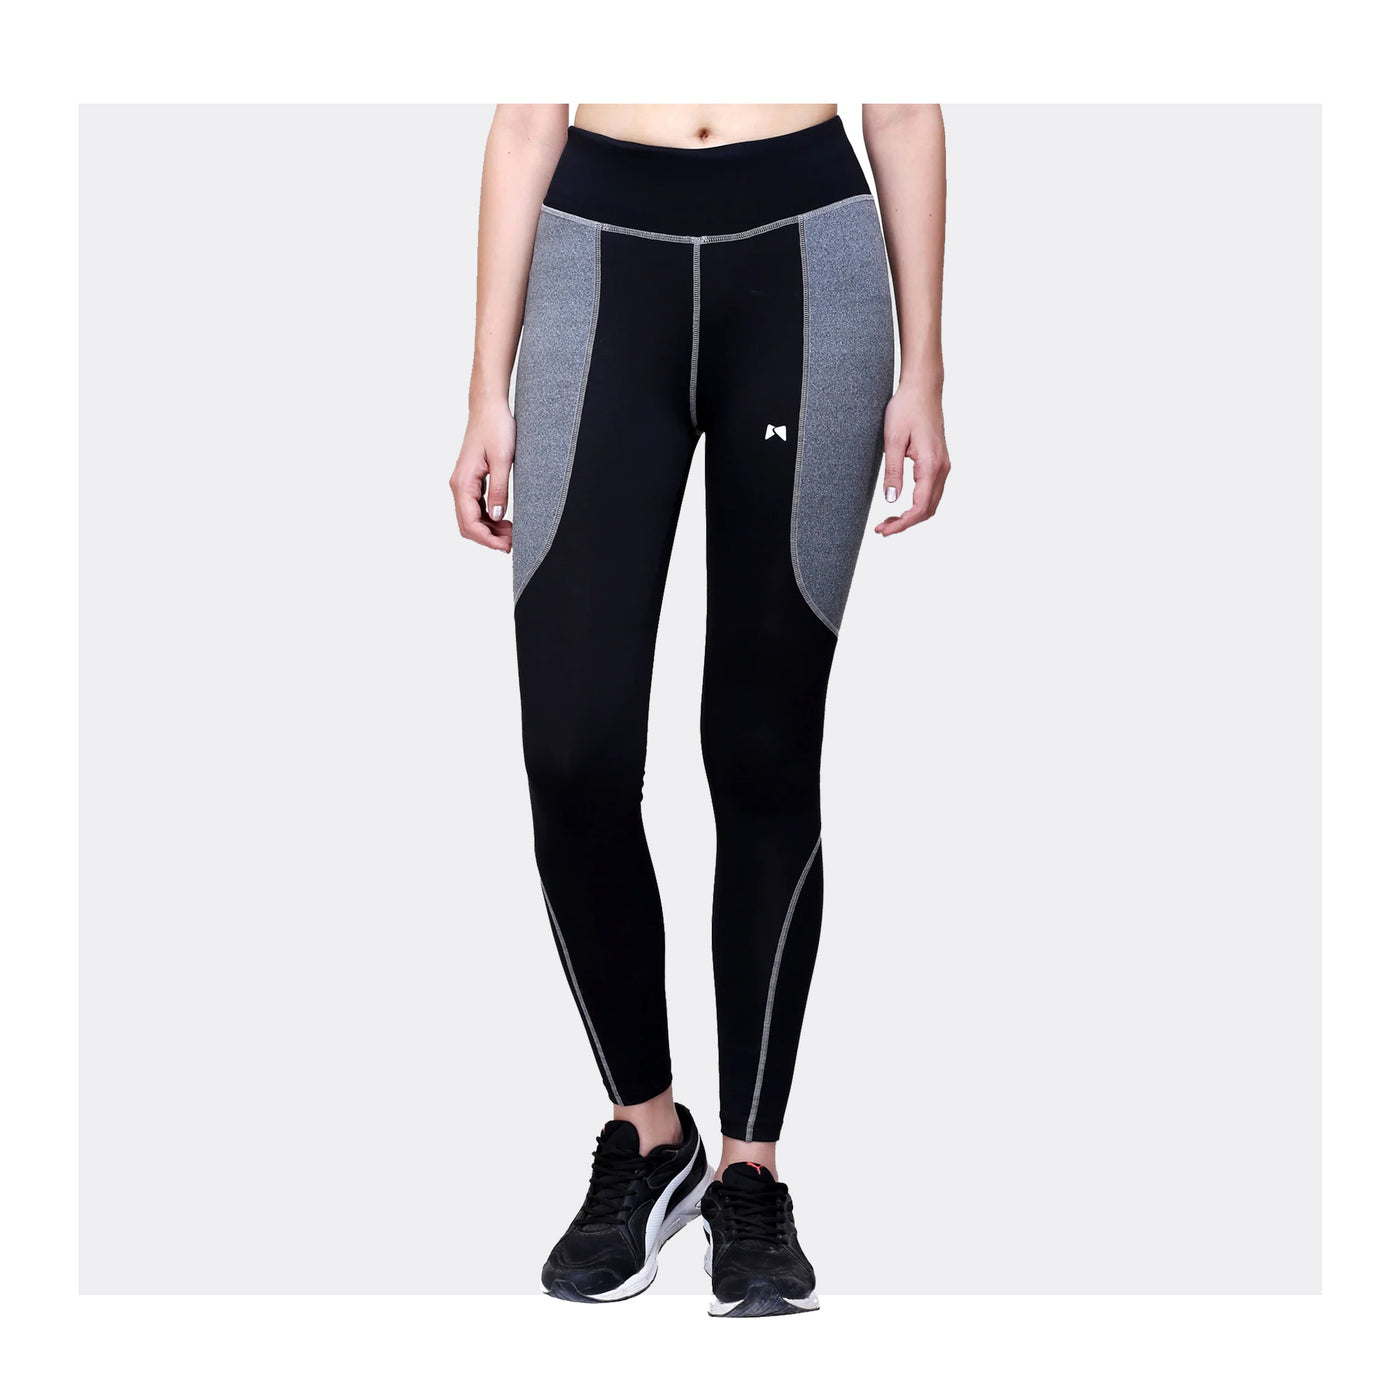 Medium Waist Workout Tight – Black & Grey